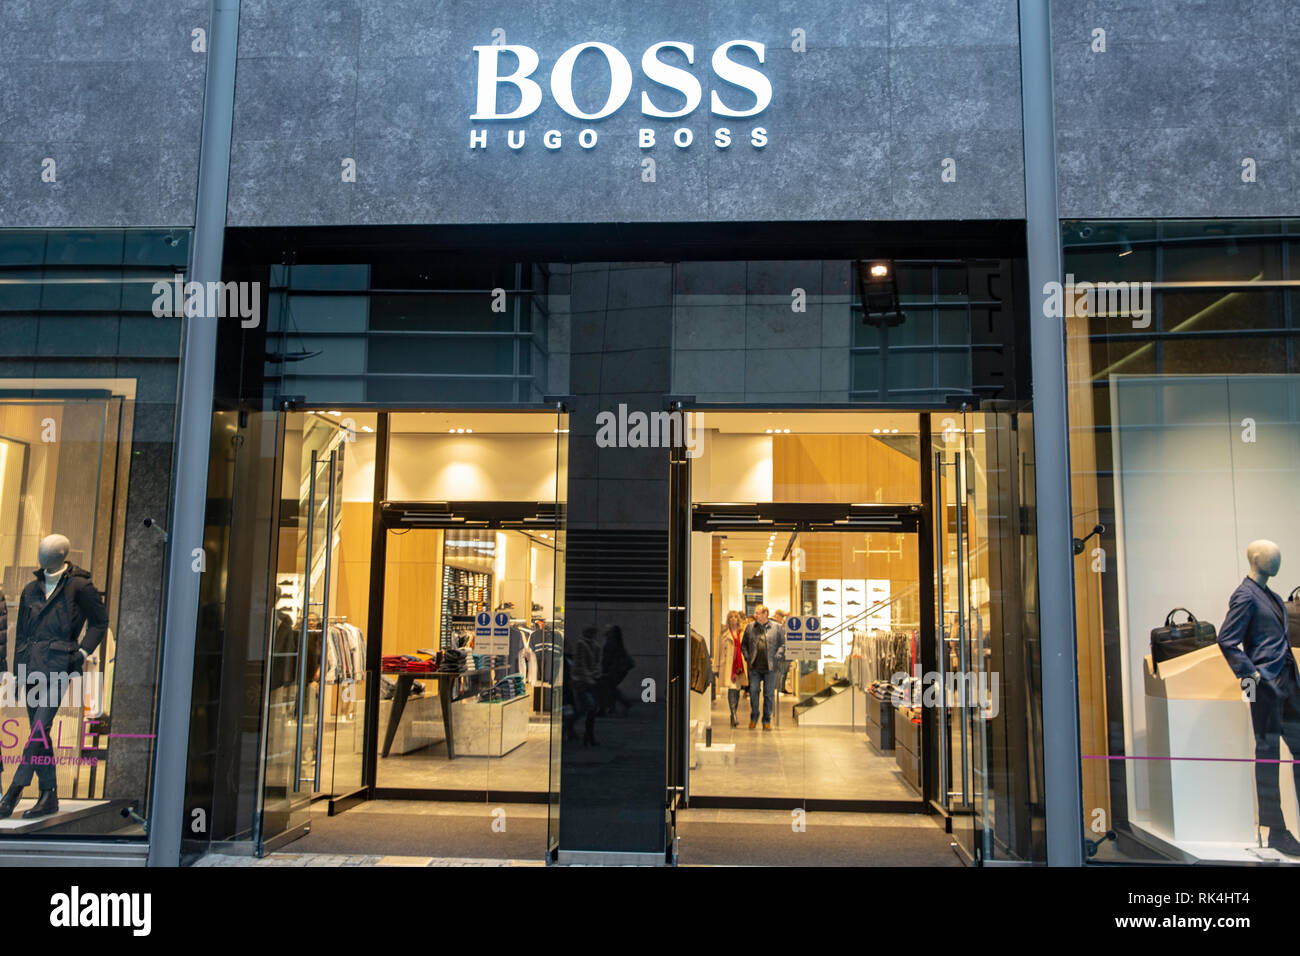 hugo boss clothing gateway prices 